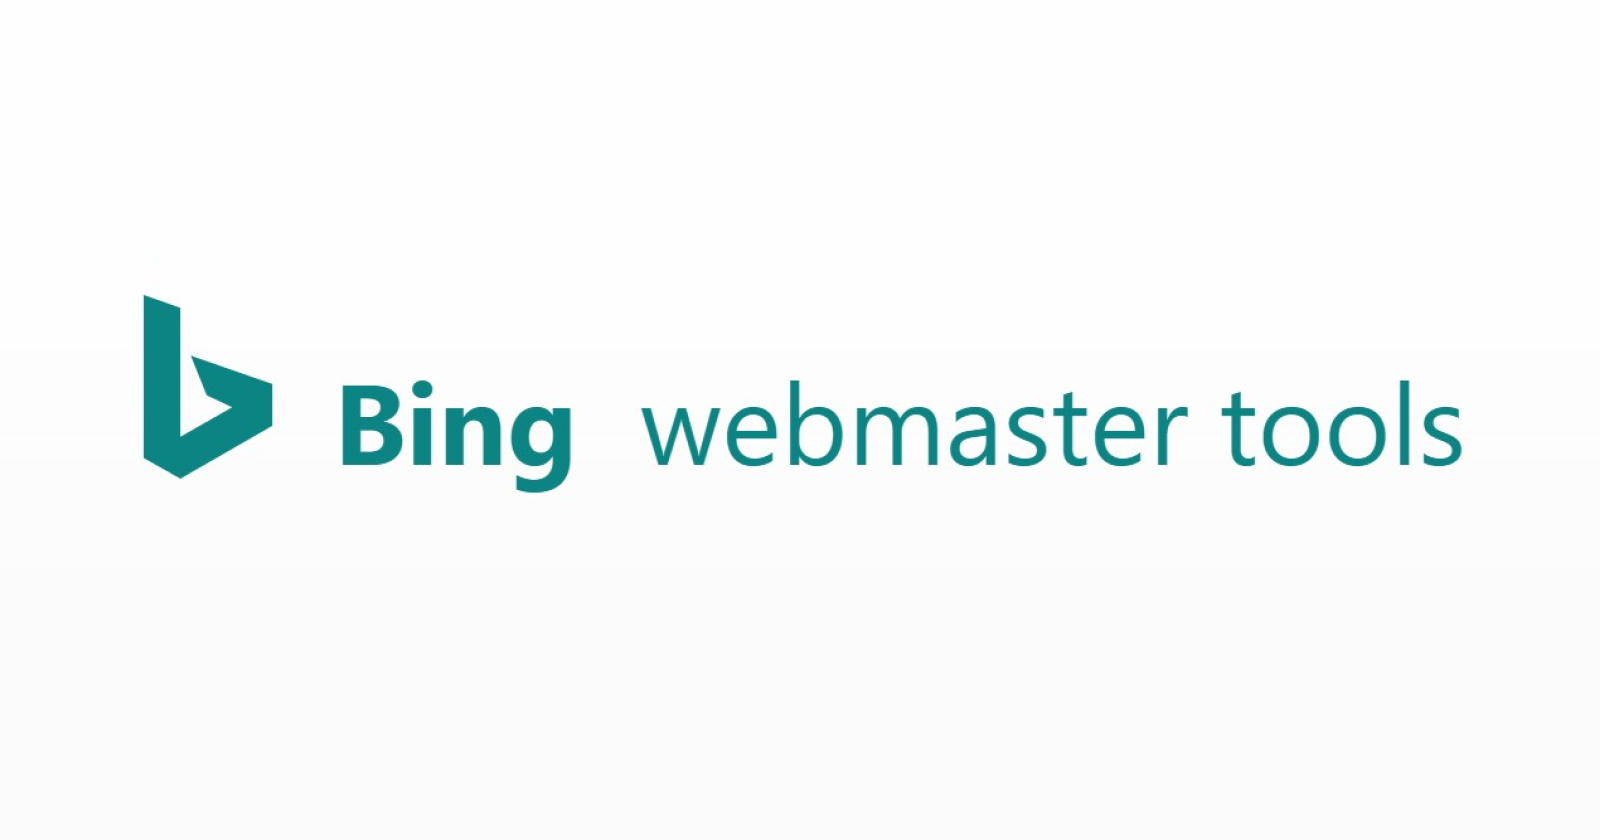 S bing. Bing Webmaster Tools. Bing логотип. Вебмастер бинг. Логотип поисковой системы бинг.